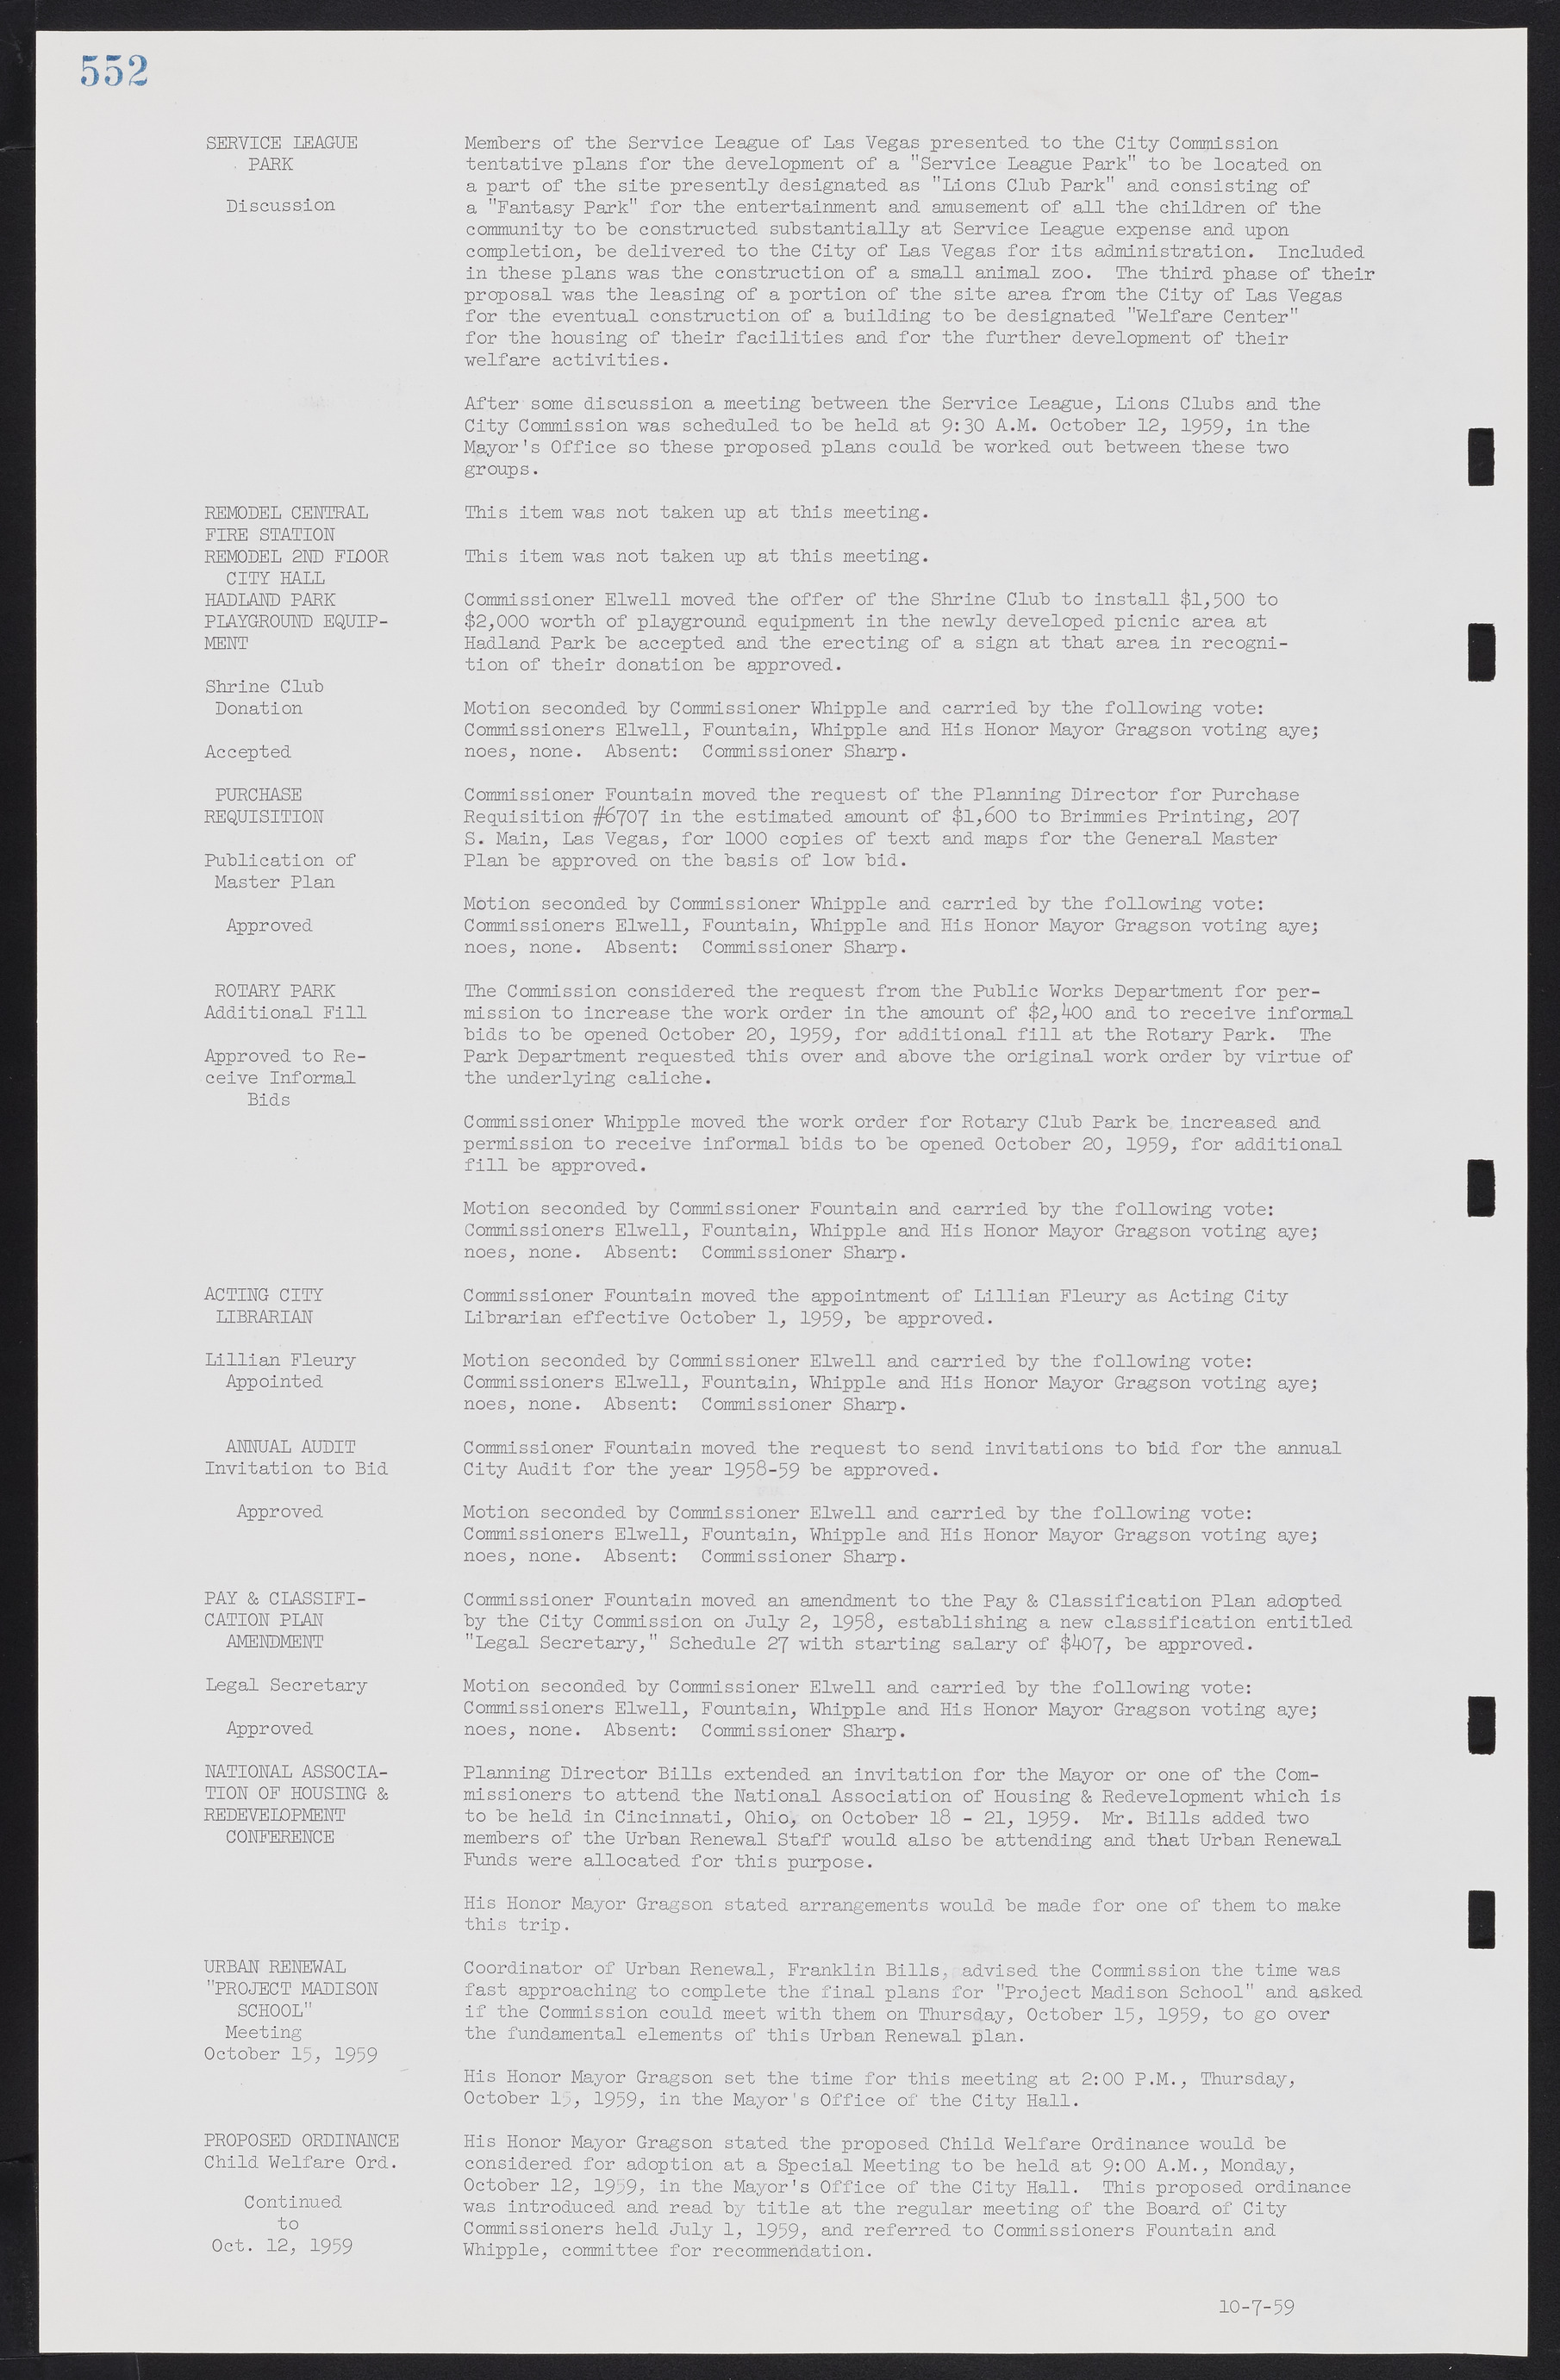 Las Vegas City Commission Minutes, November 20, 1957 to December 2, 1959, lvc000011-588